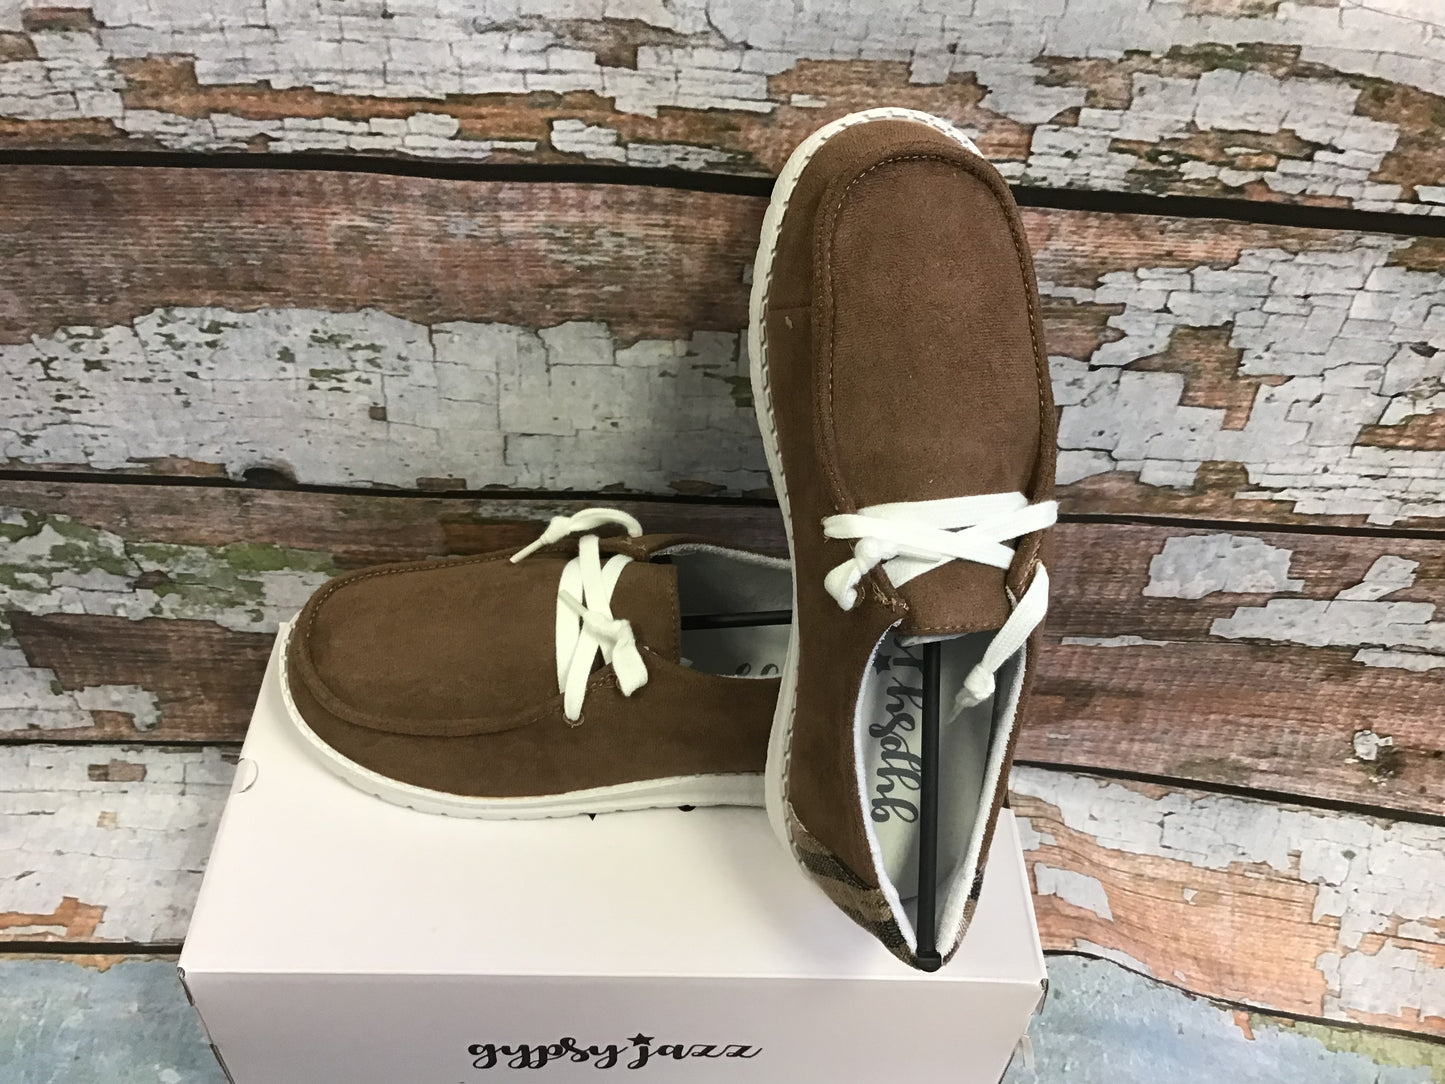 Shoes Women’s Tan Poppy Suede GJSP0351-251